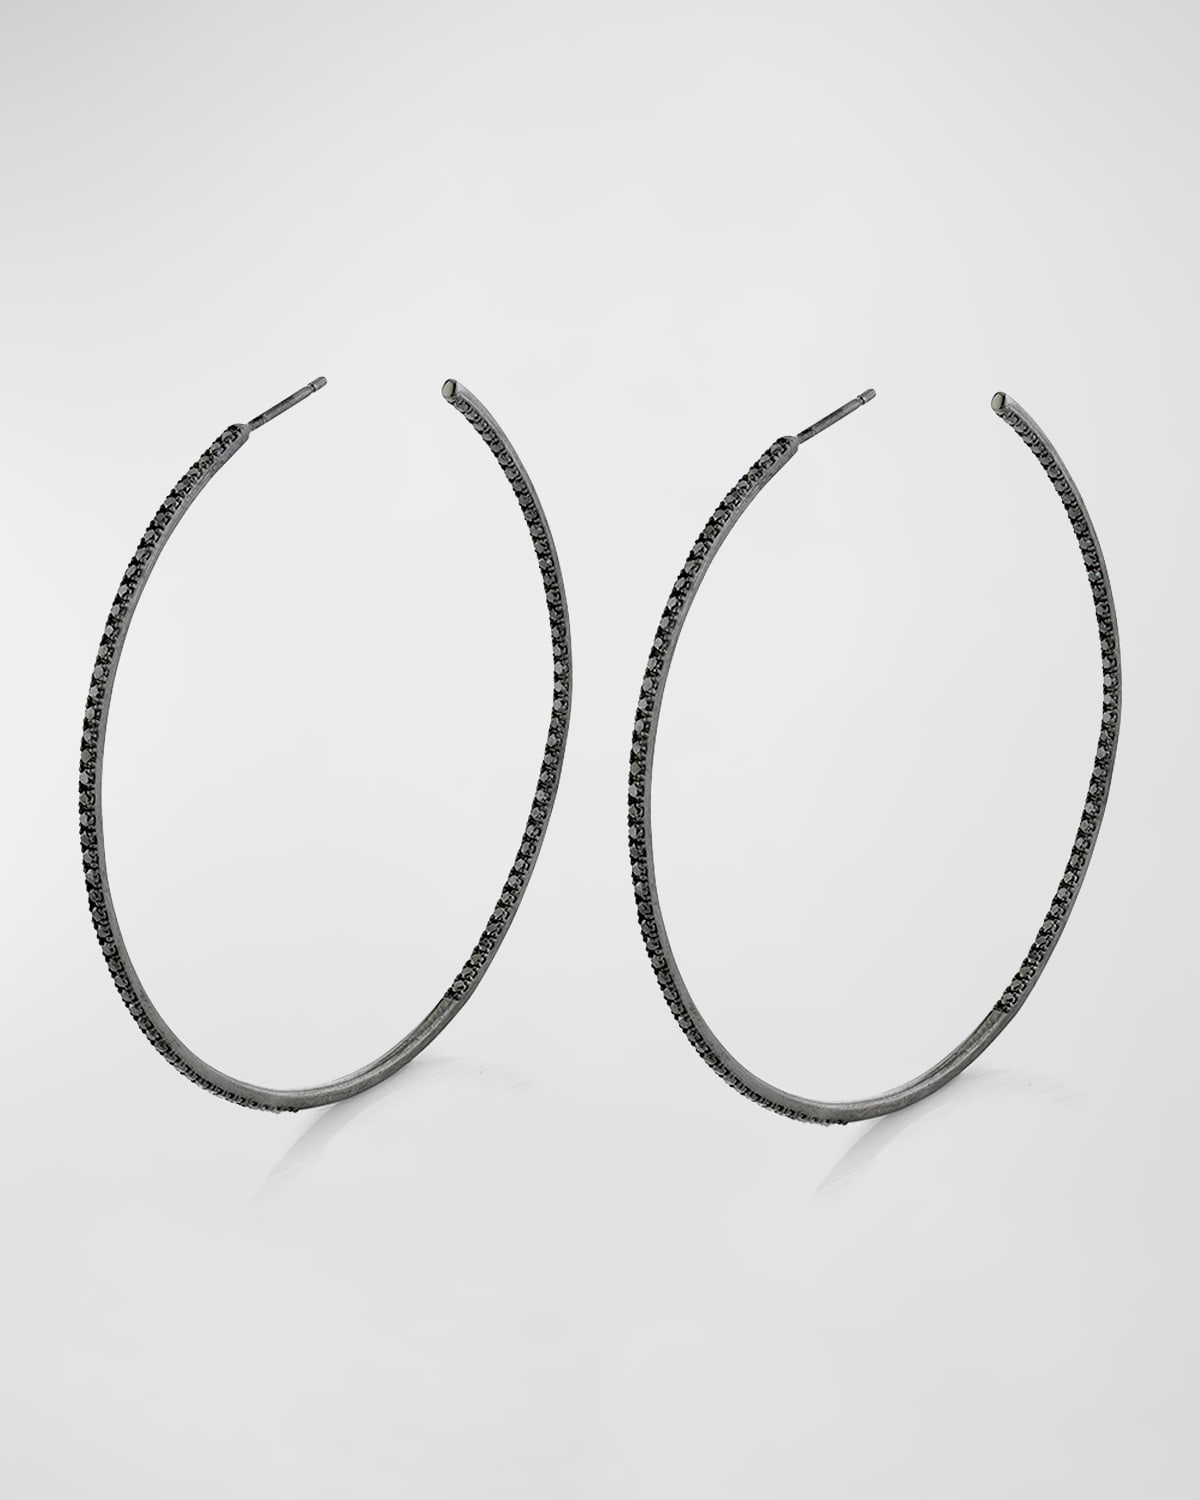 Inside-Out Black Diamond Hoop Earrings